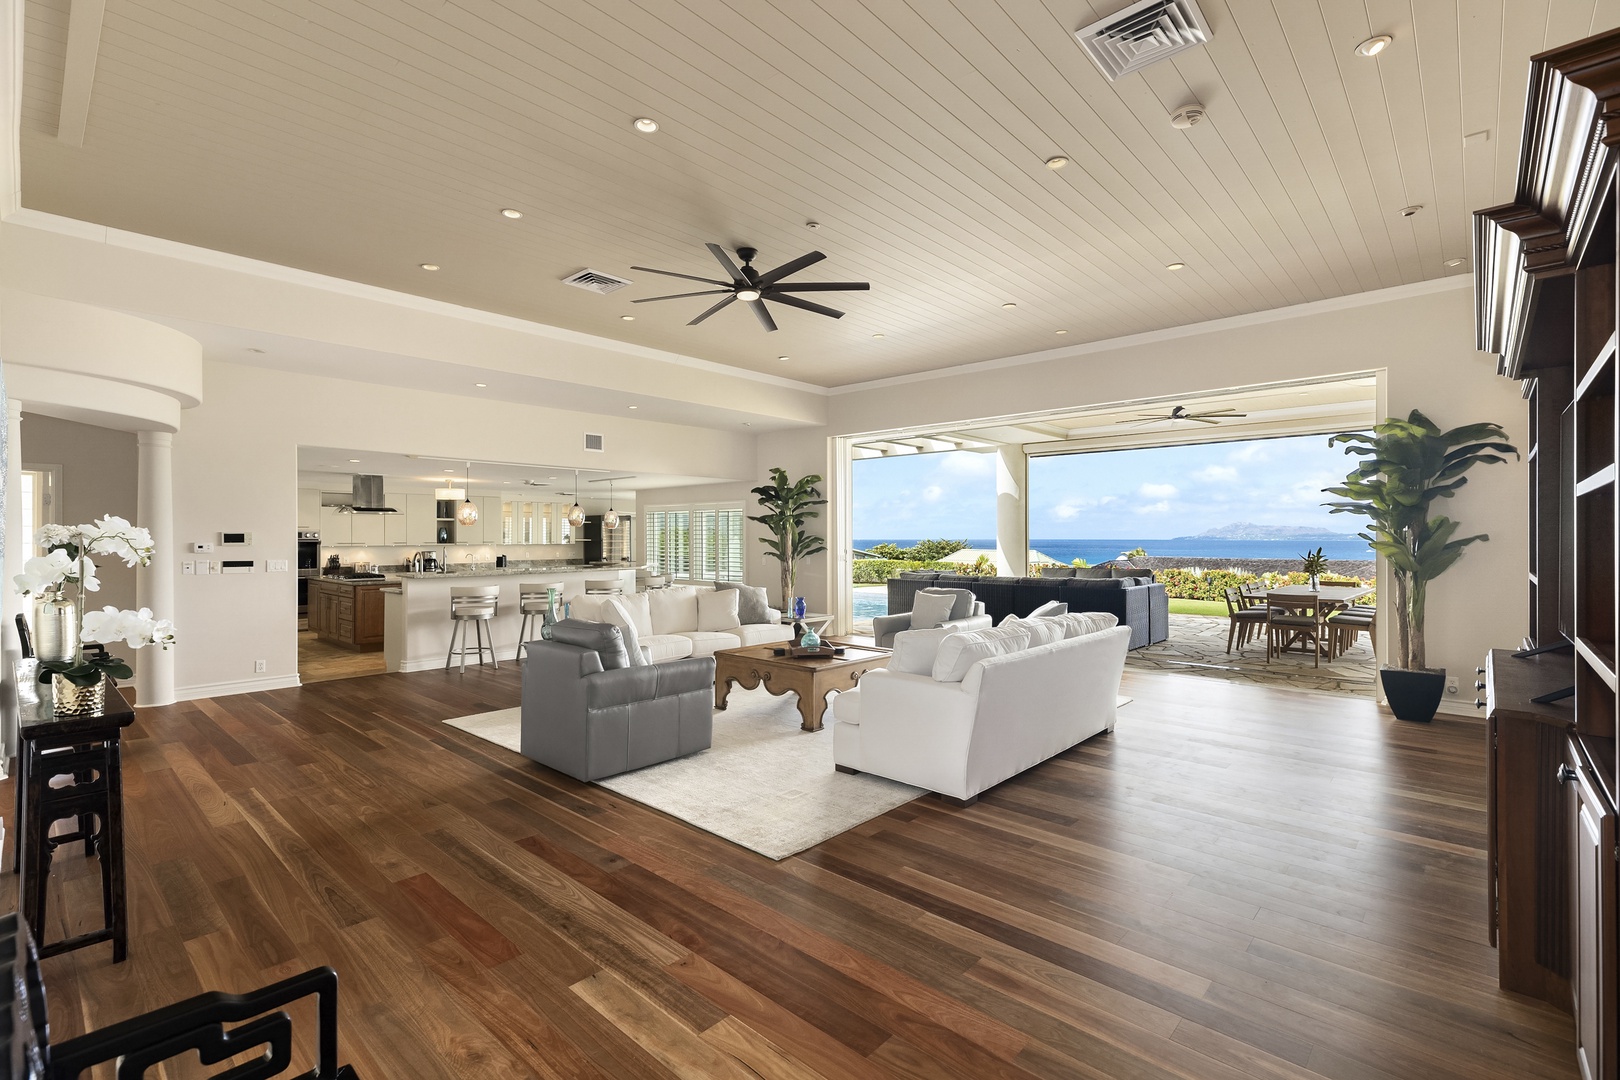 Honolulu Vacation Rentals, Hale Makana - Large, spacious living area